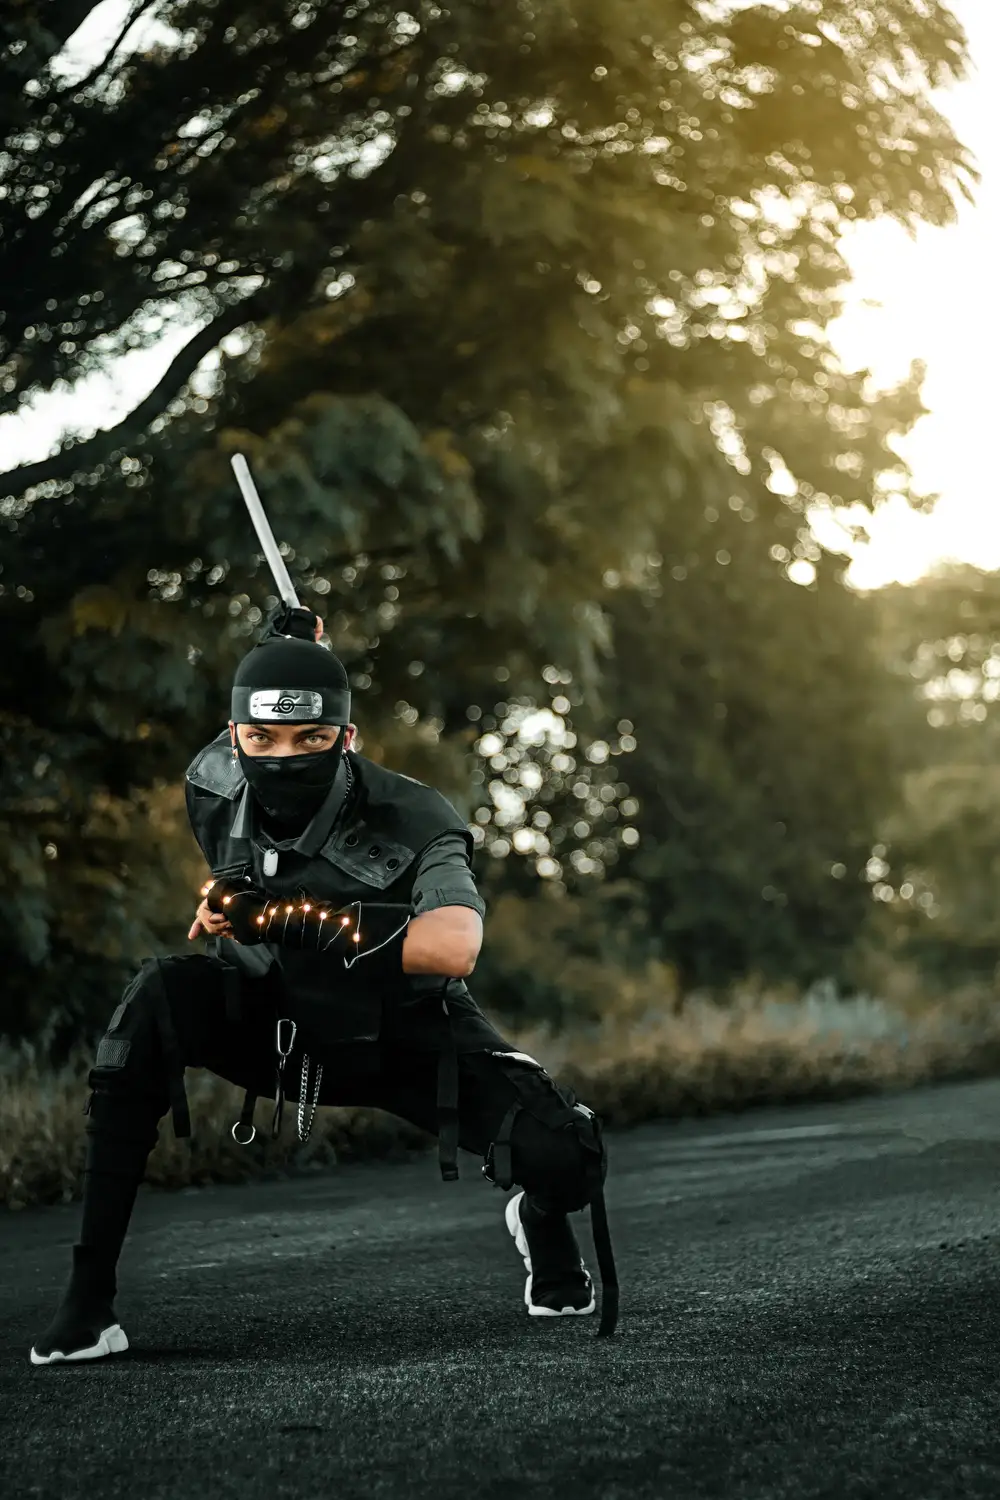 Ninja holding his sword